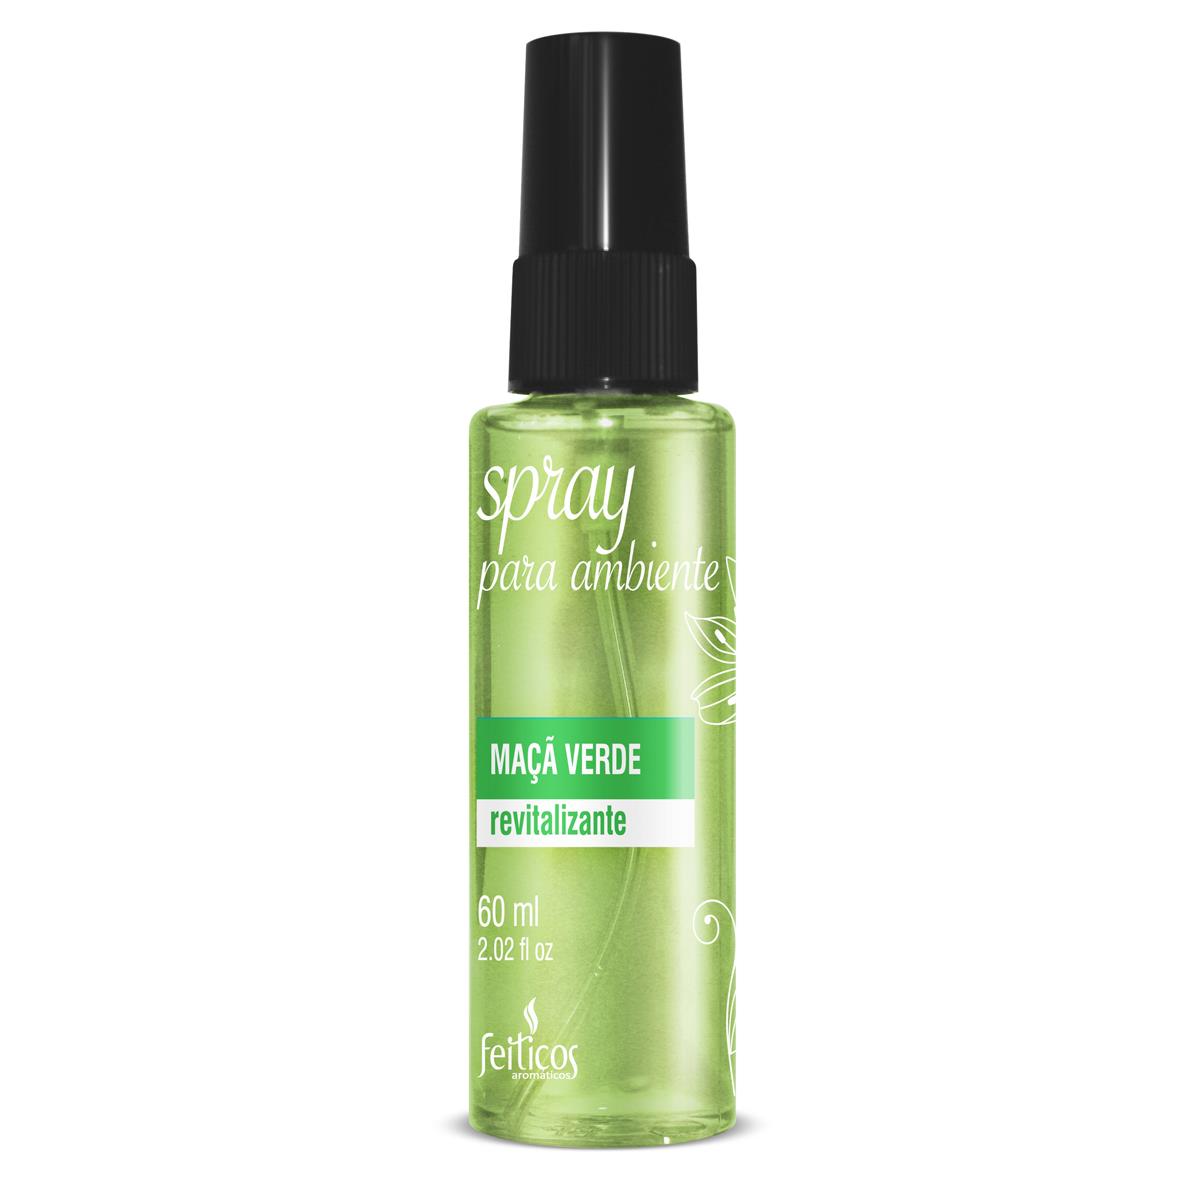 Spray para Ambiente Maça Verde Revitalizante 60ml Feitiços